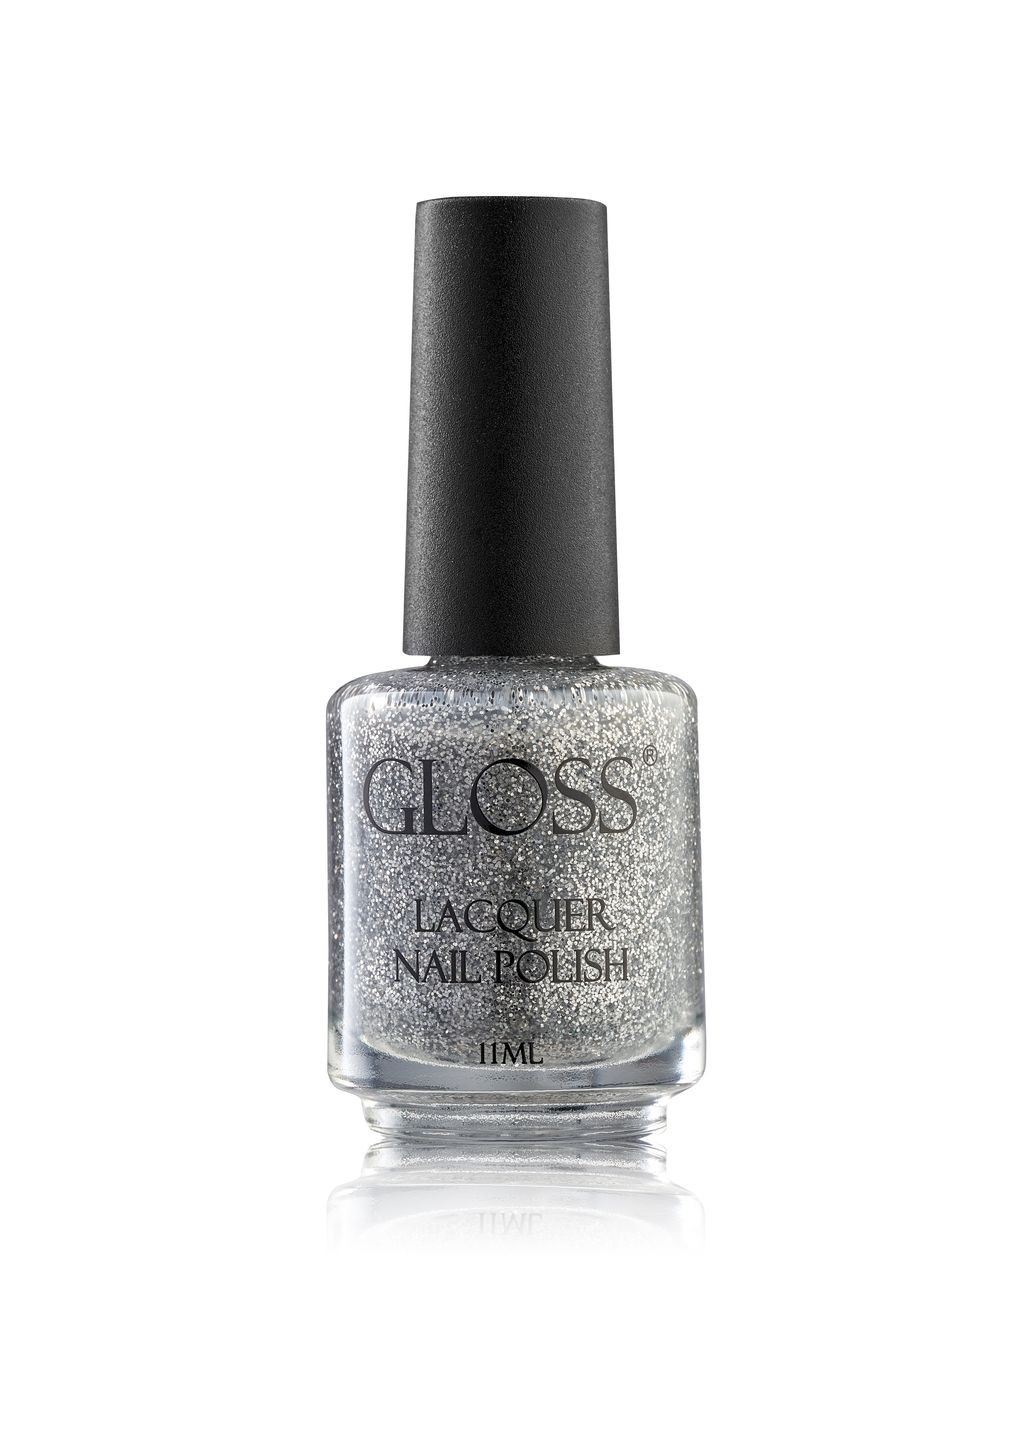 Лак для ногтей GLOSS 015, 11 мл Gloss Company lacquer nail polish (276255612)